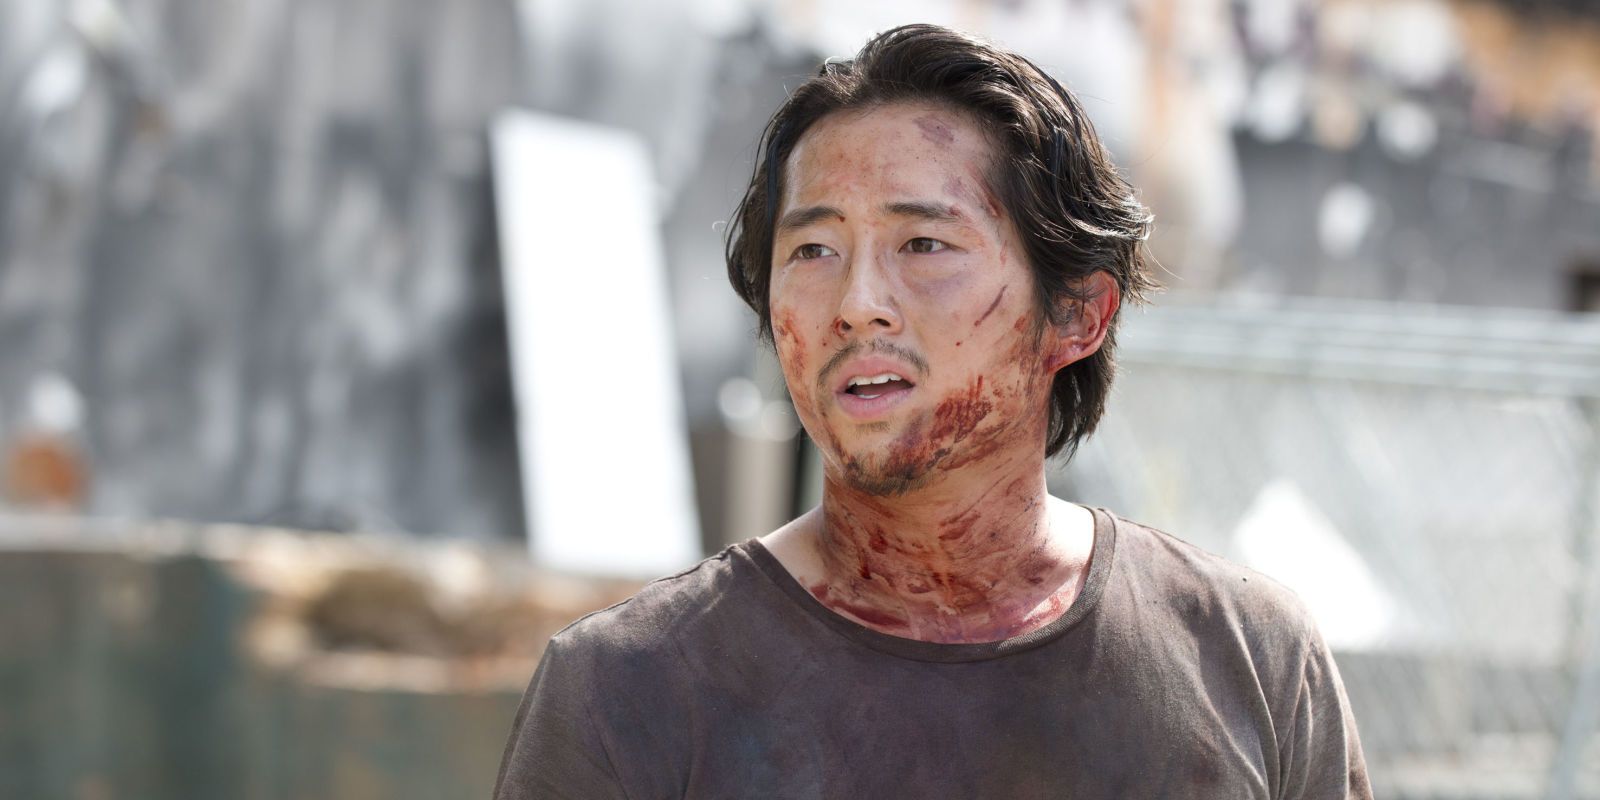 Glenn covered in blood on The Walking Dead